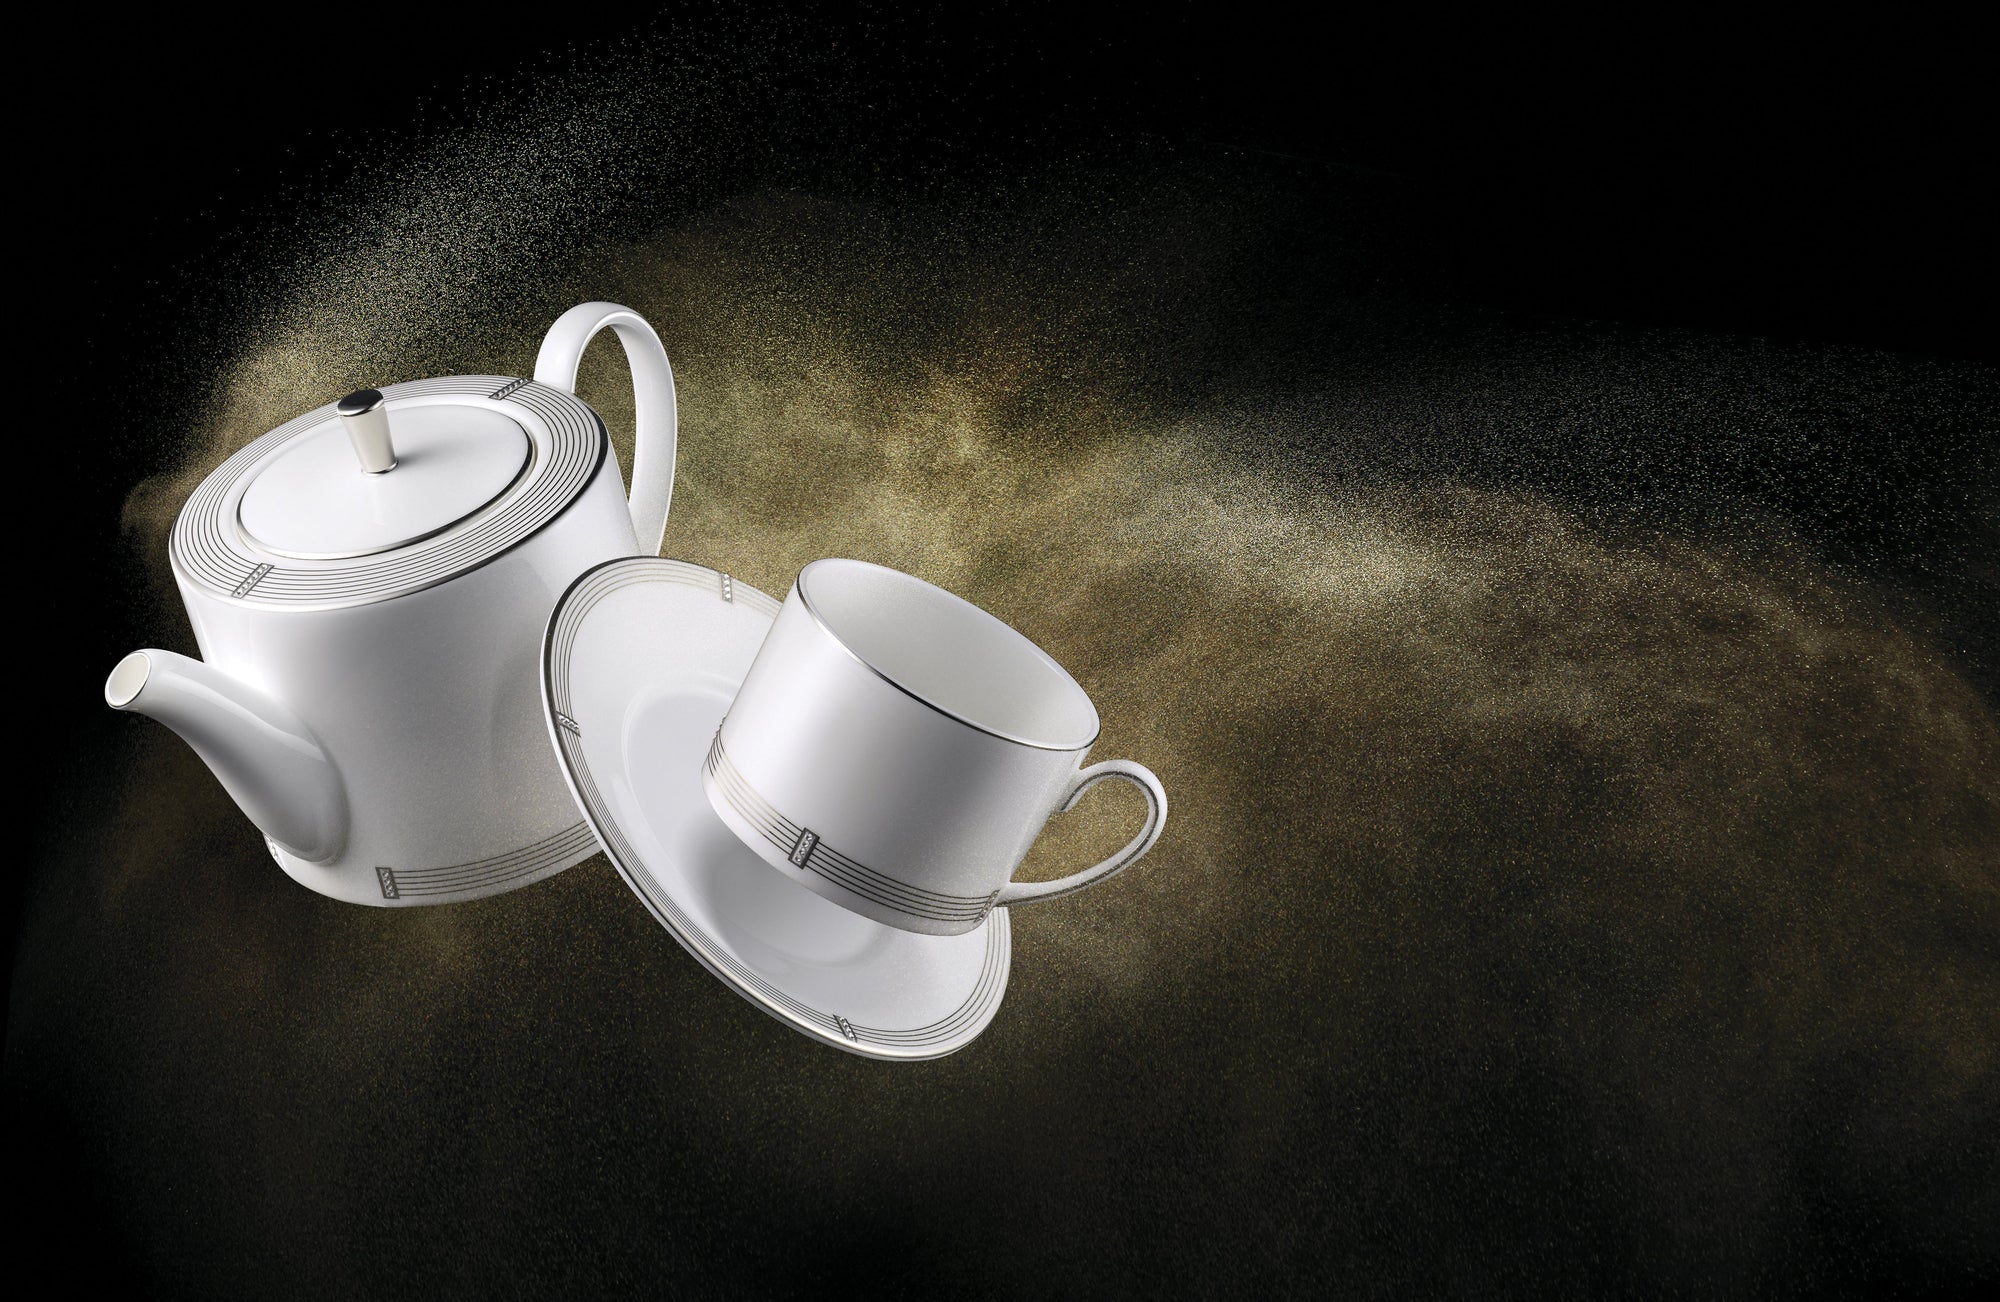 Prouna Regency Platinum Espresso Cup & Saucer White Background Photo